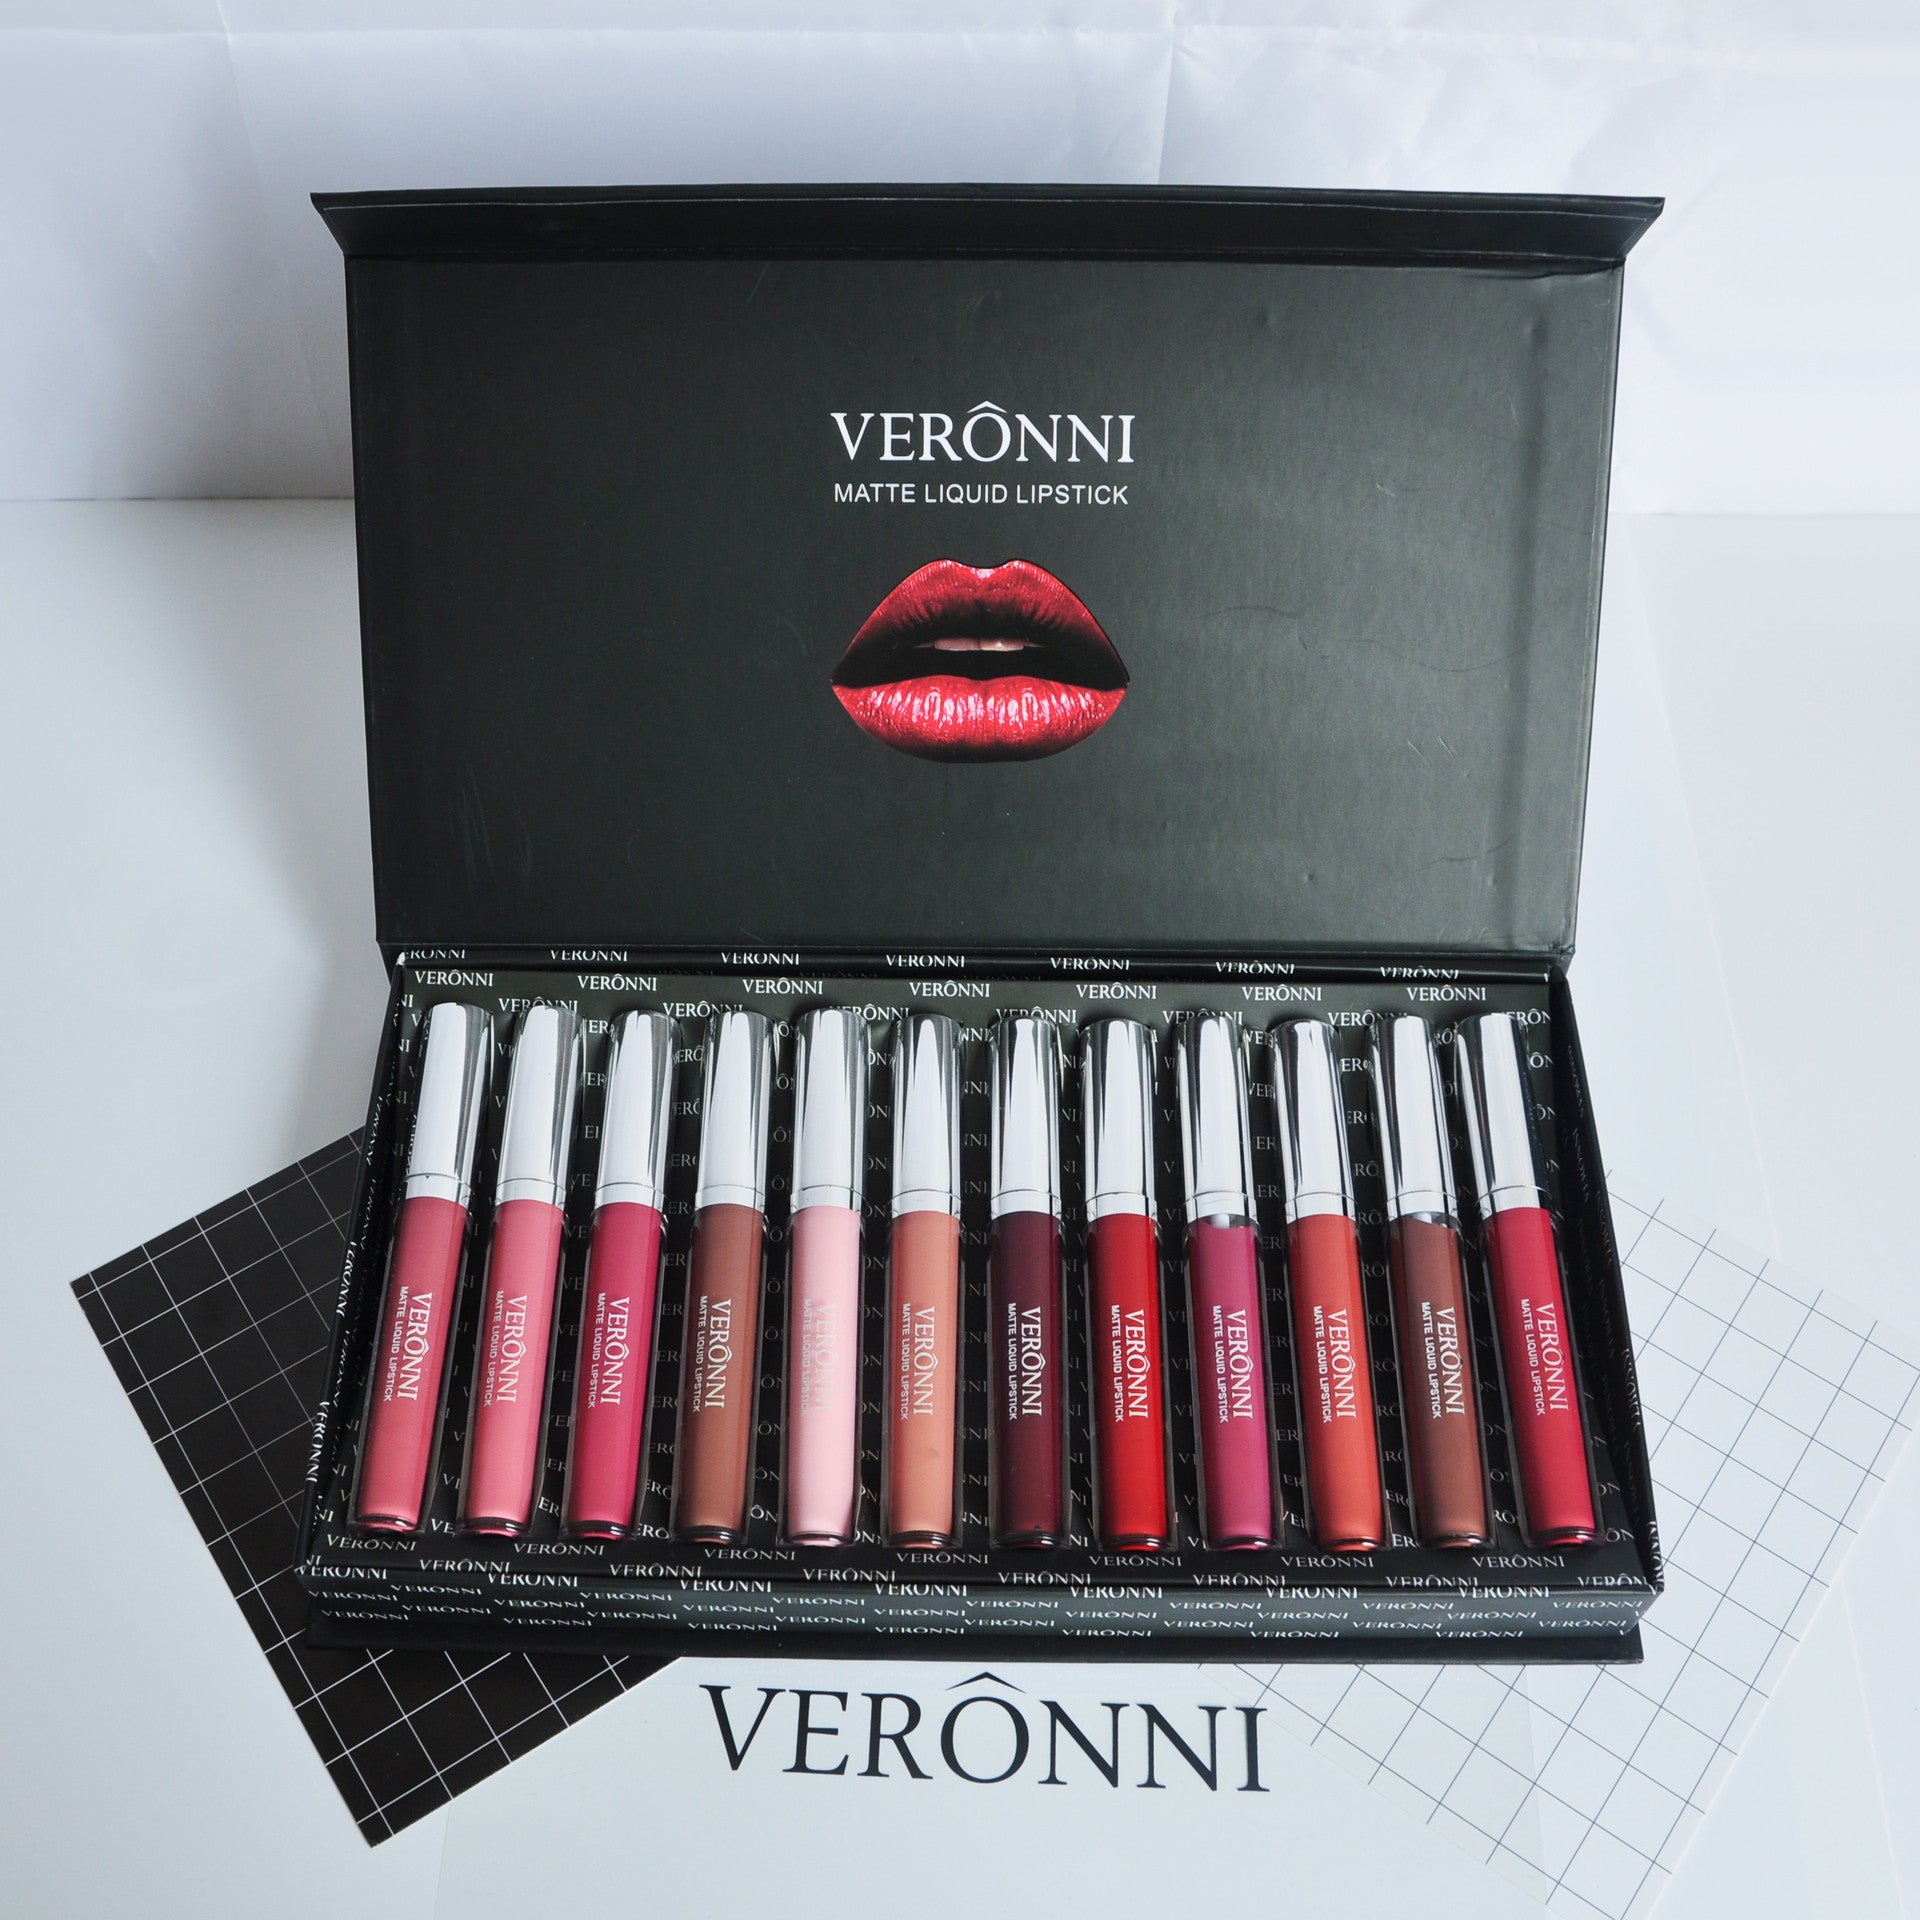 12 lipstick gift box set